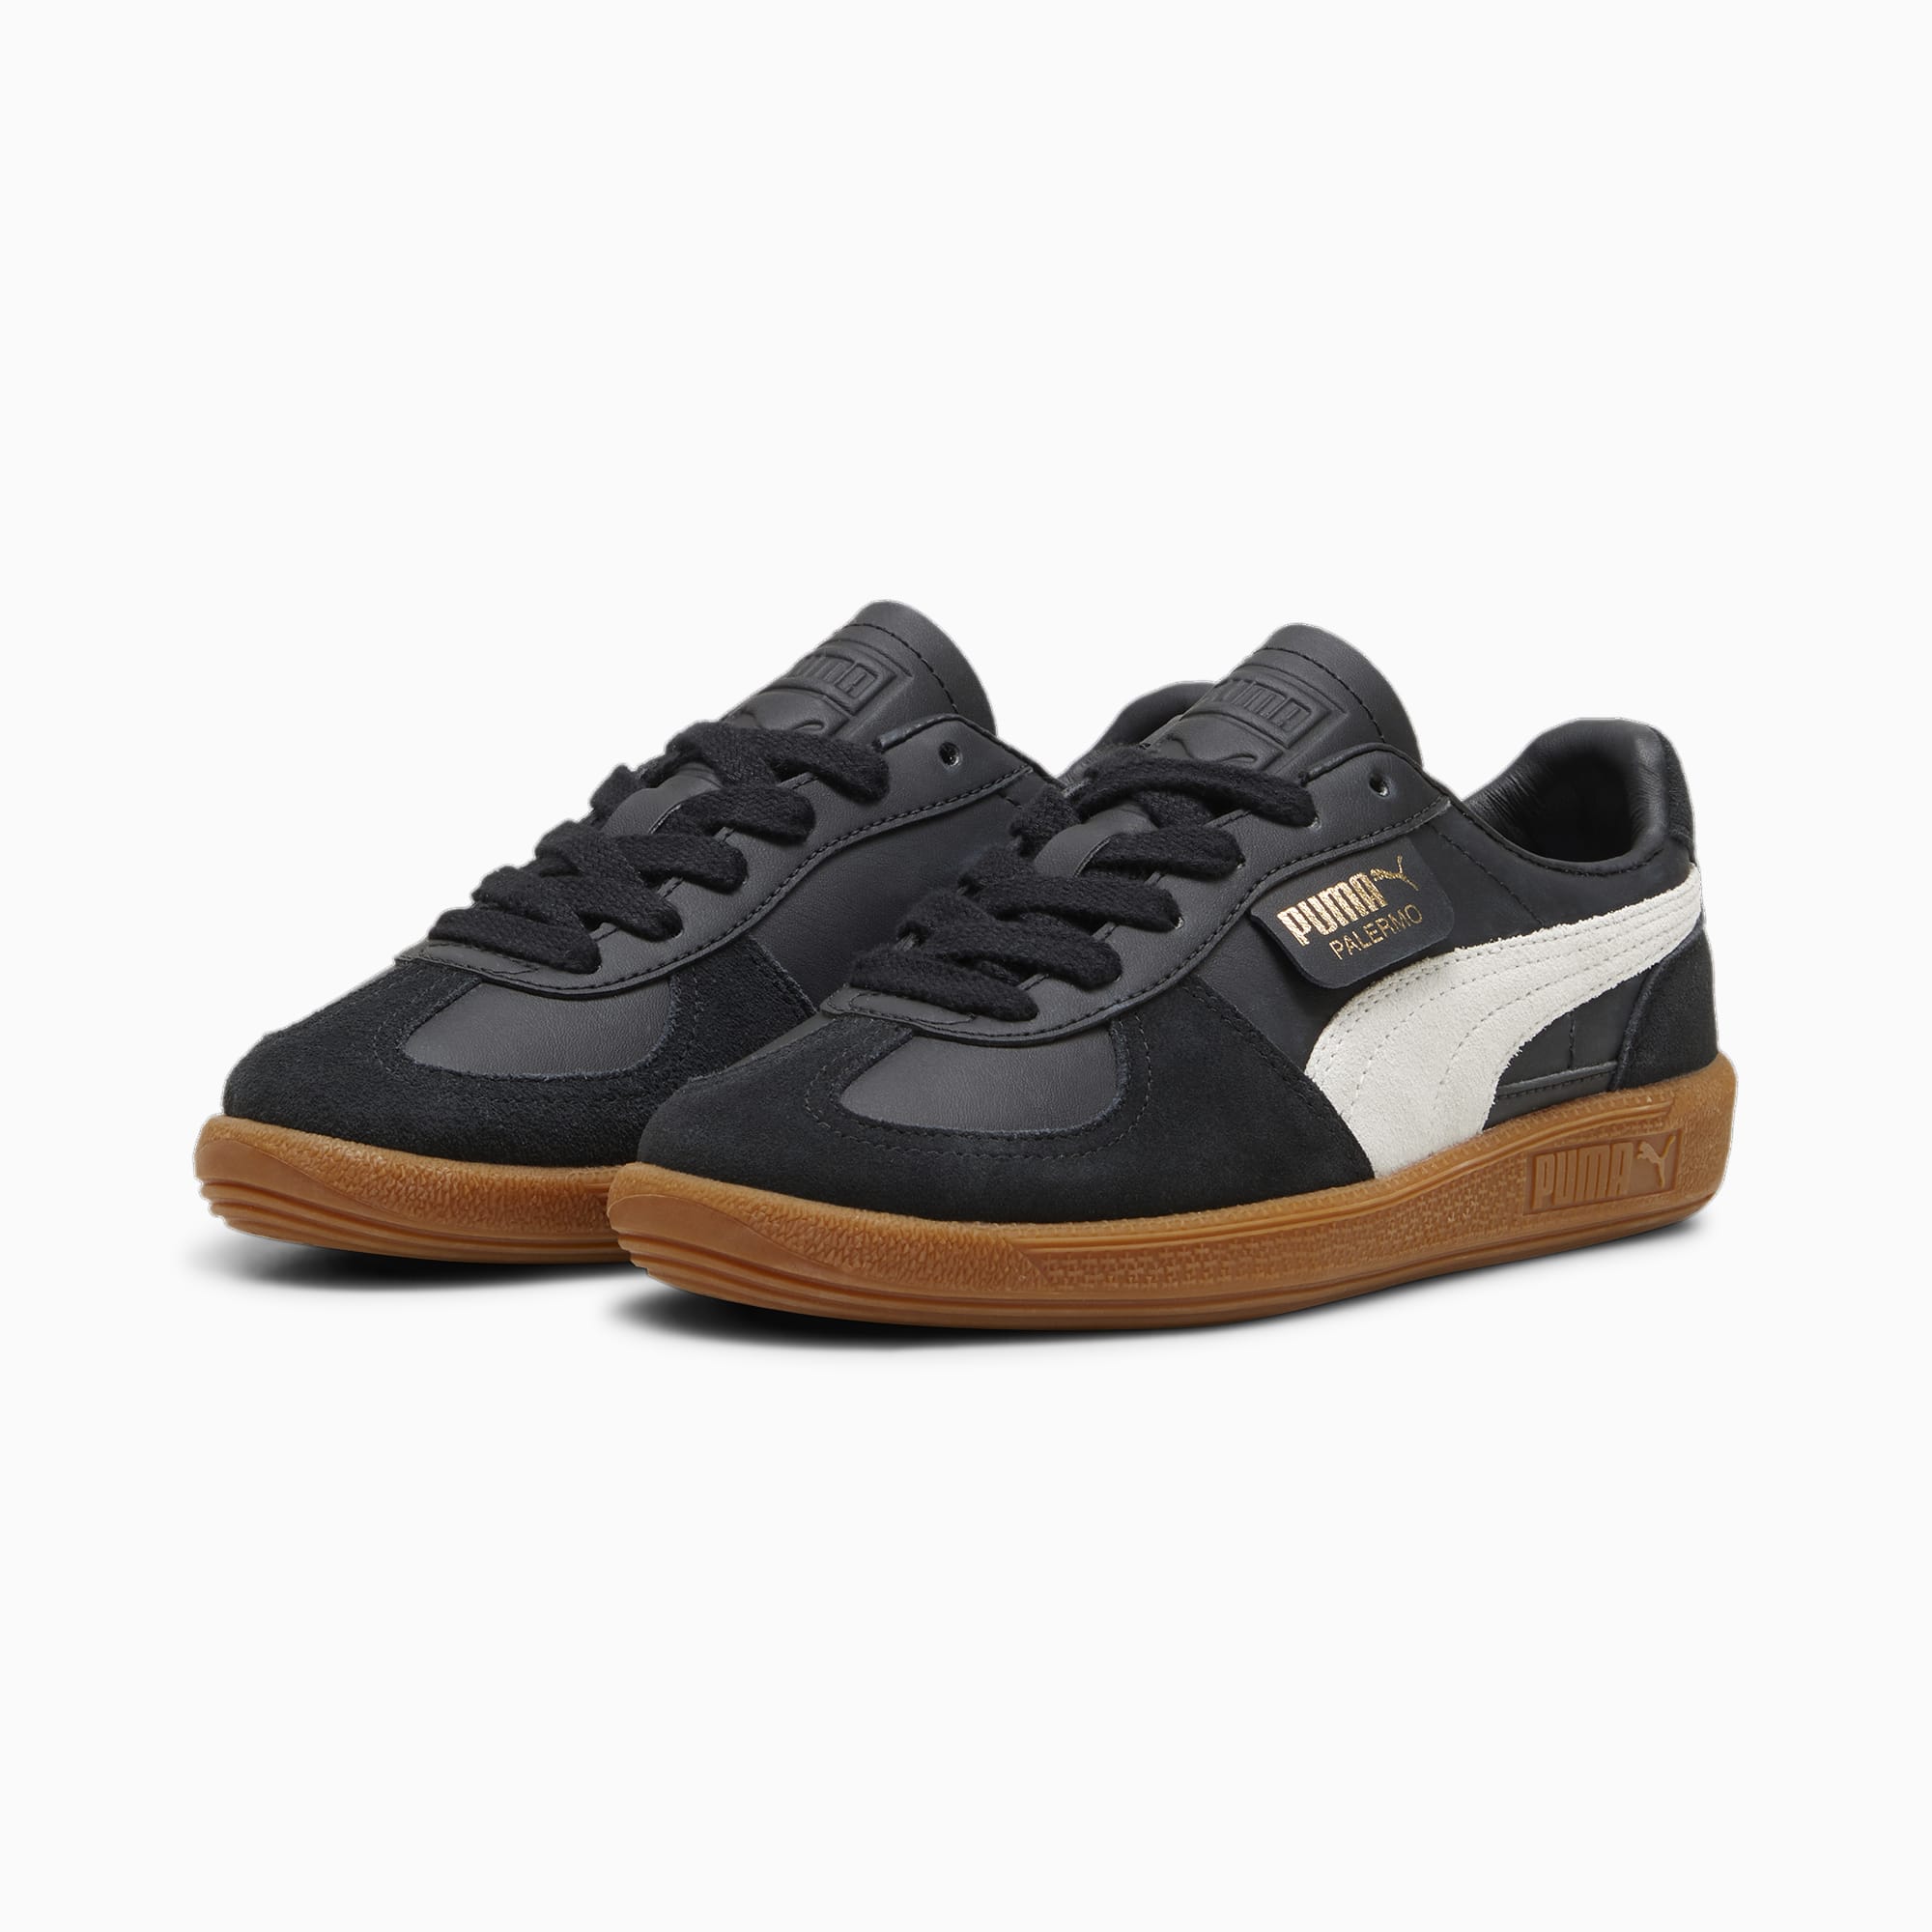 PUMA Palermo Lth Sneakers Teenager Schuhe, Schwarz/Grau, Größe: 35.5, Schuhe